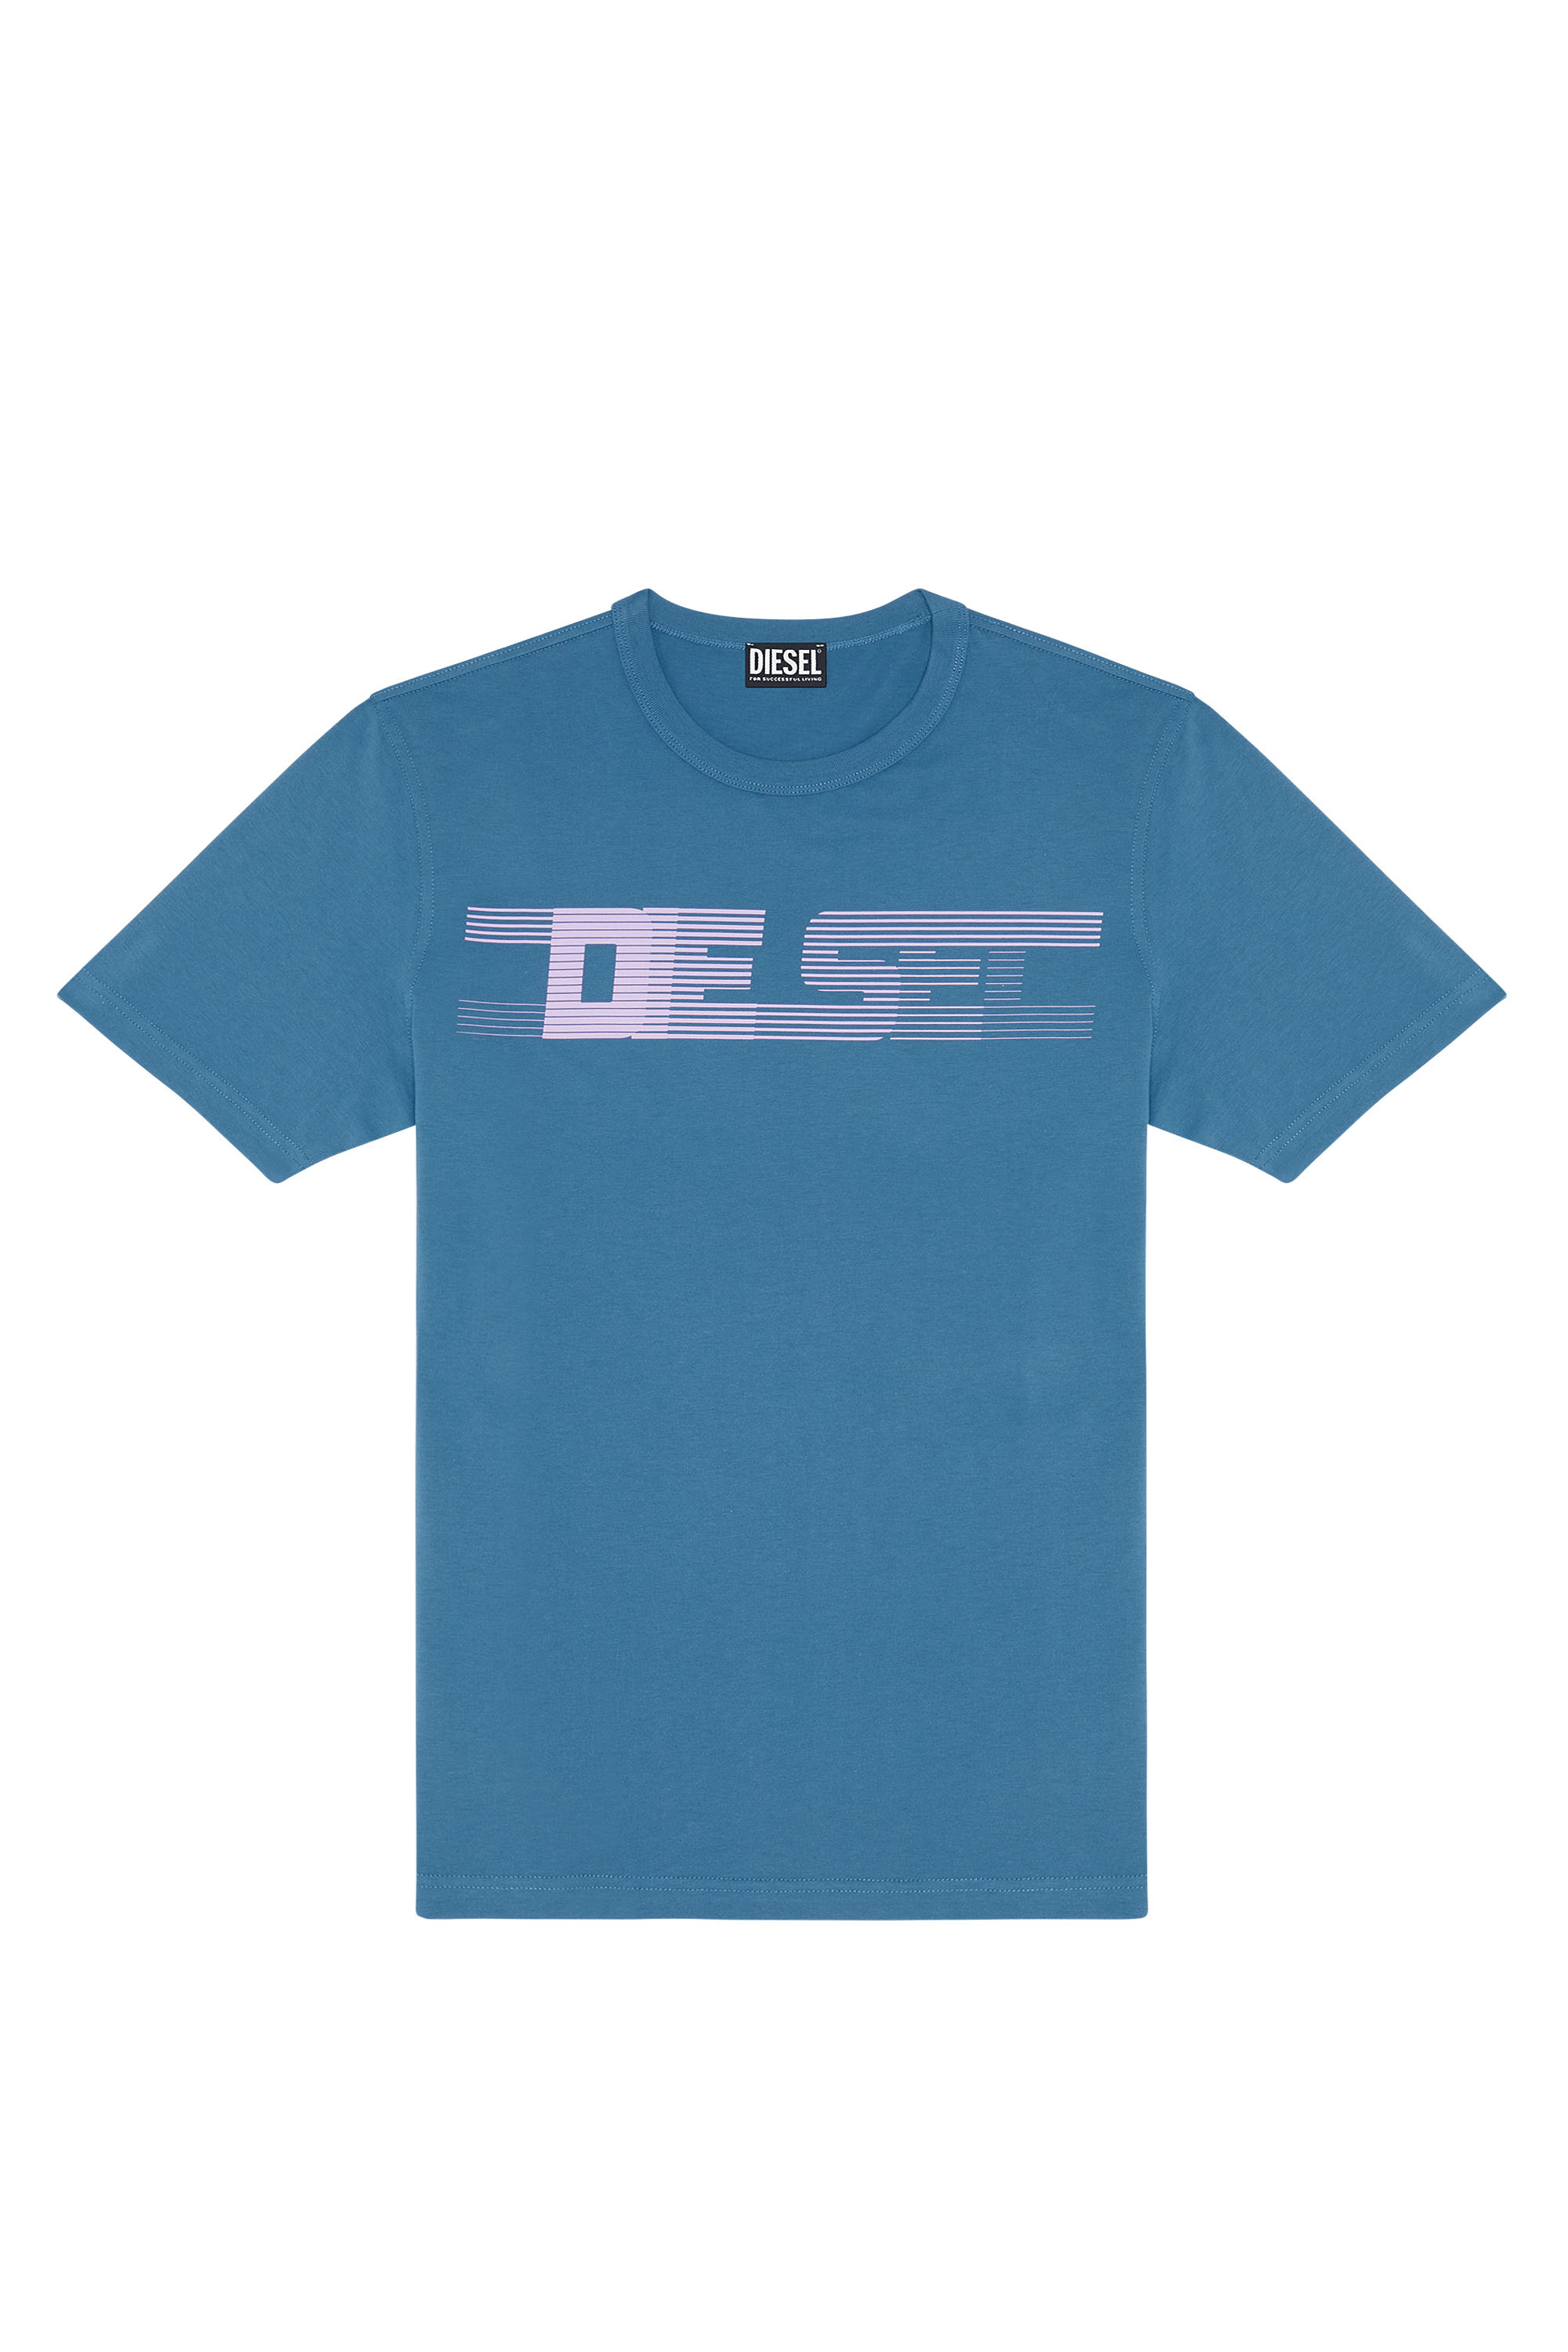 Diesel - T-JUST-E19, Blue - Image 3